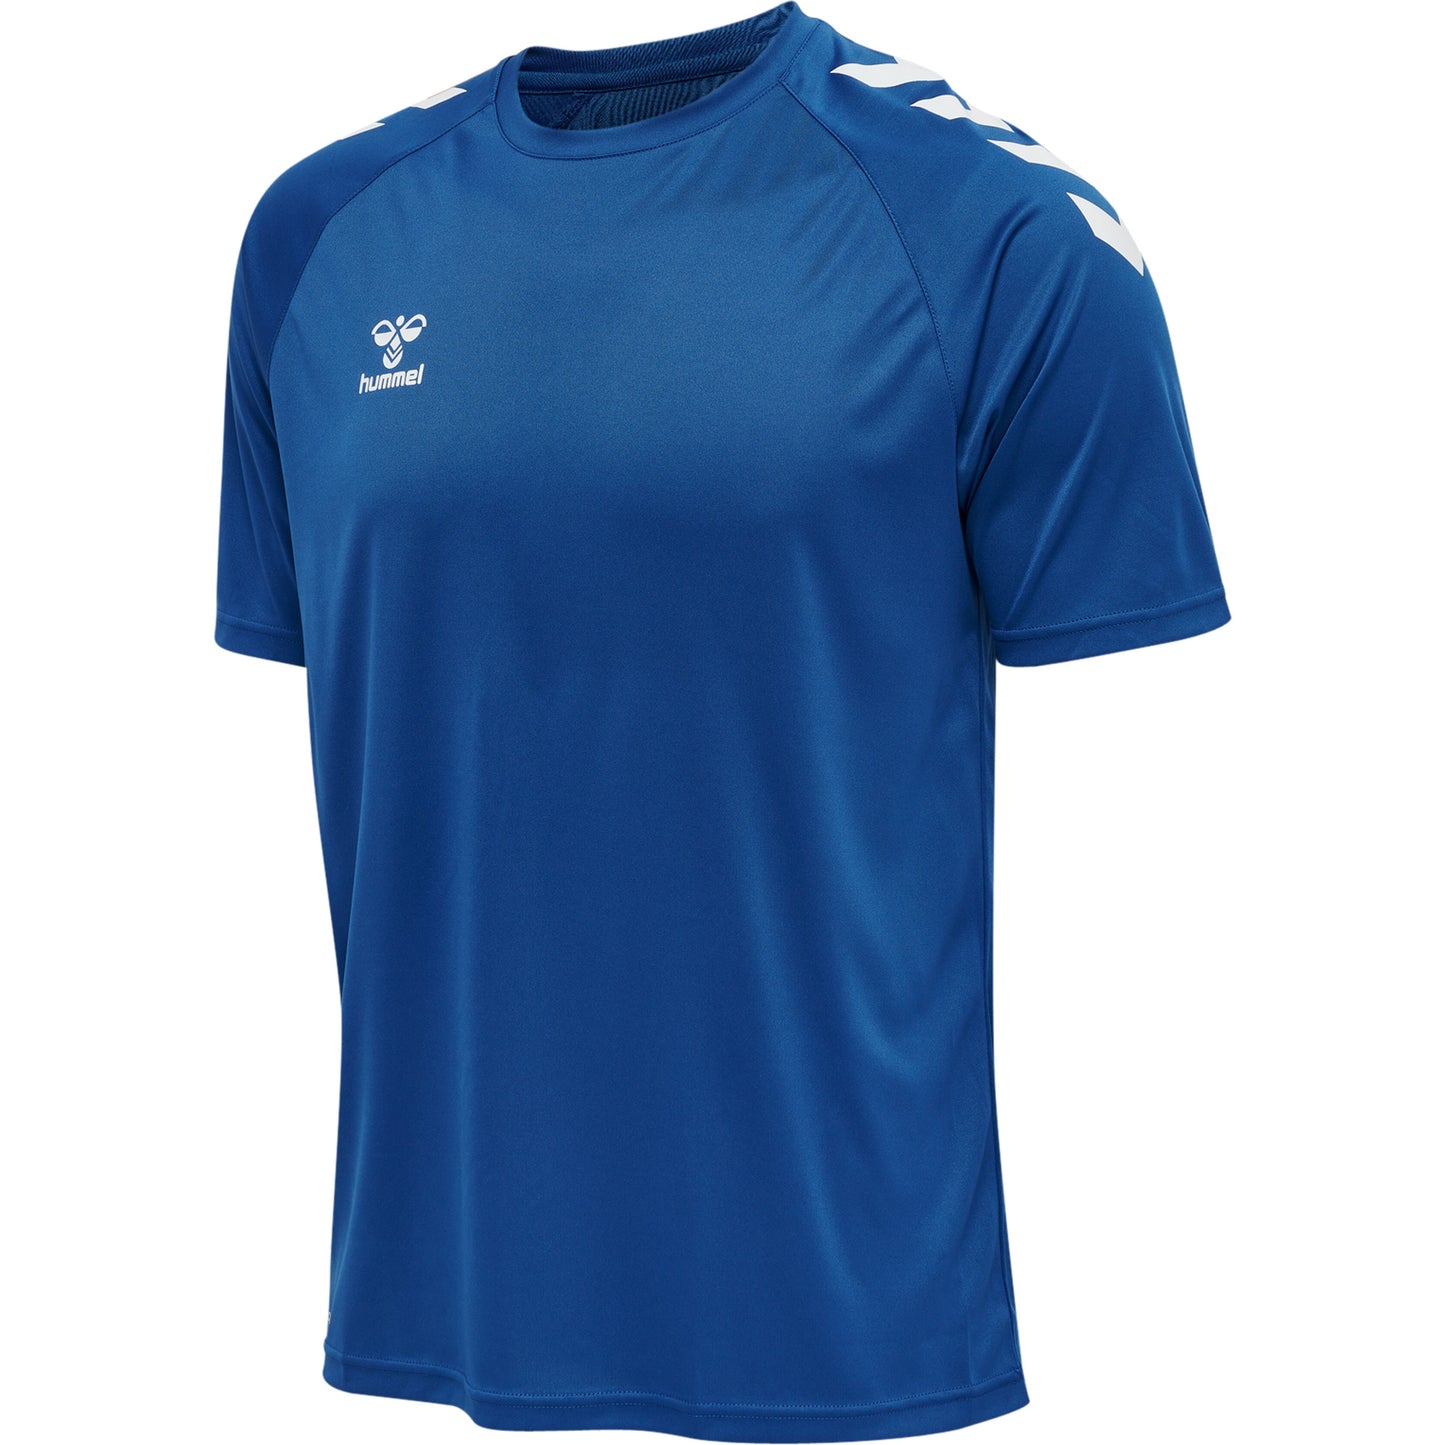 Hummel Core XK T shirt Blau